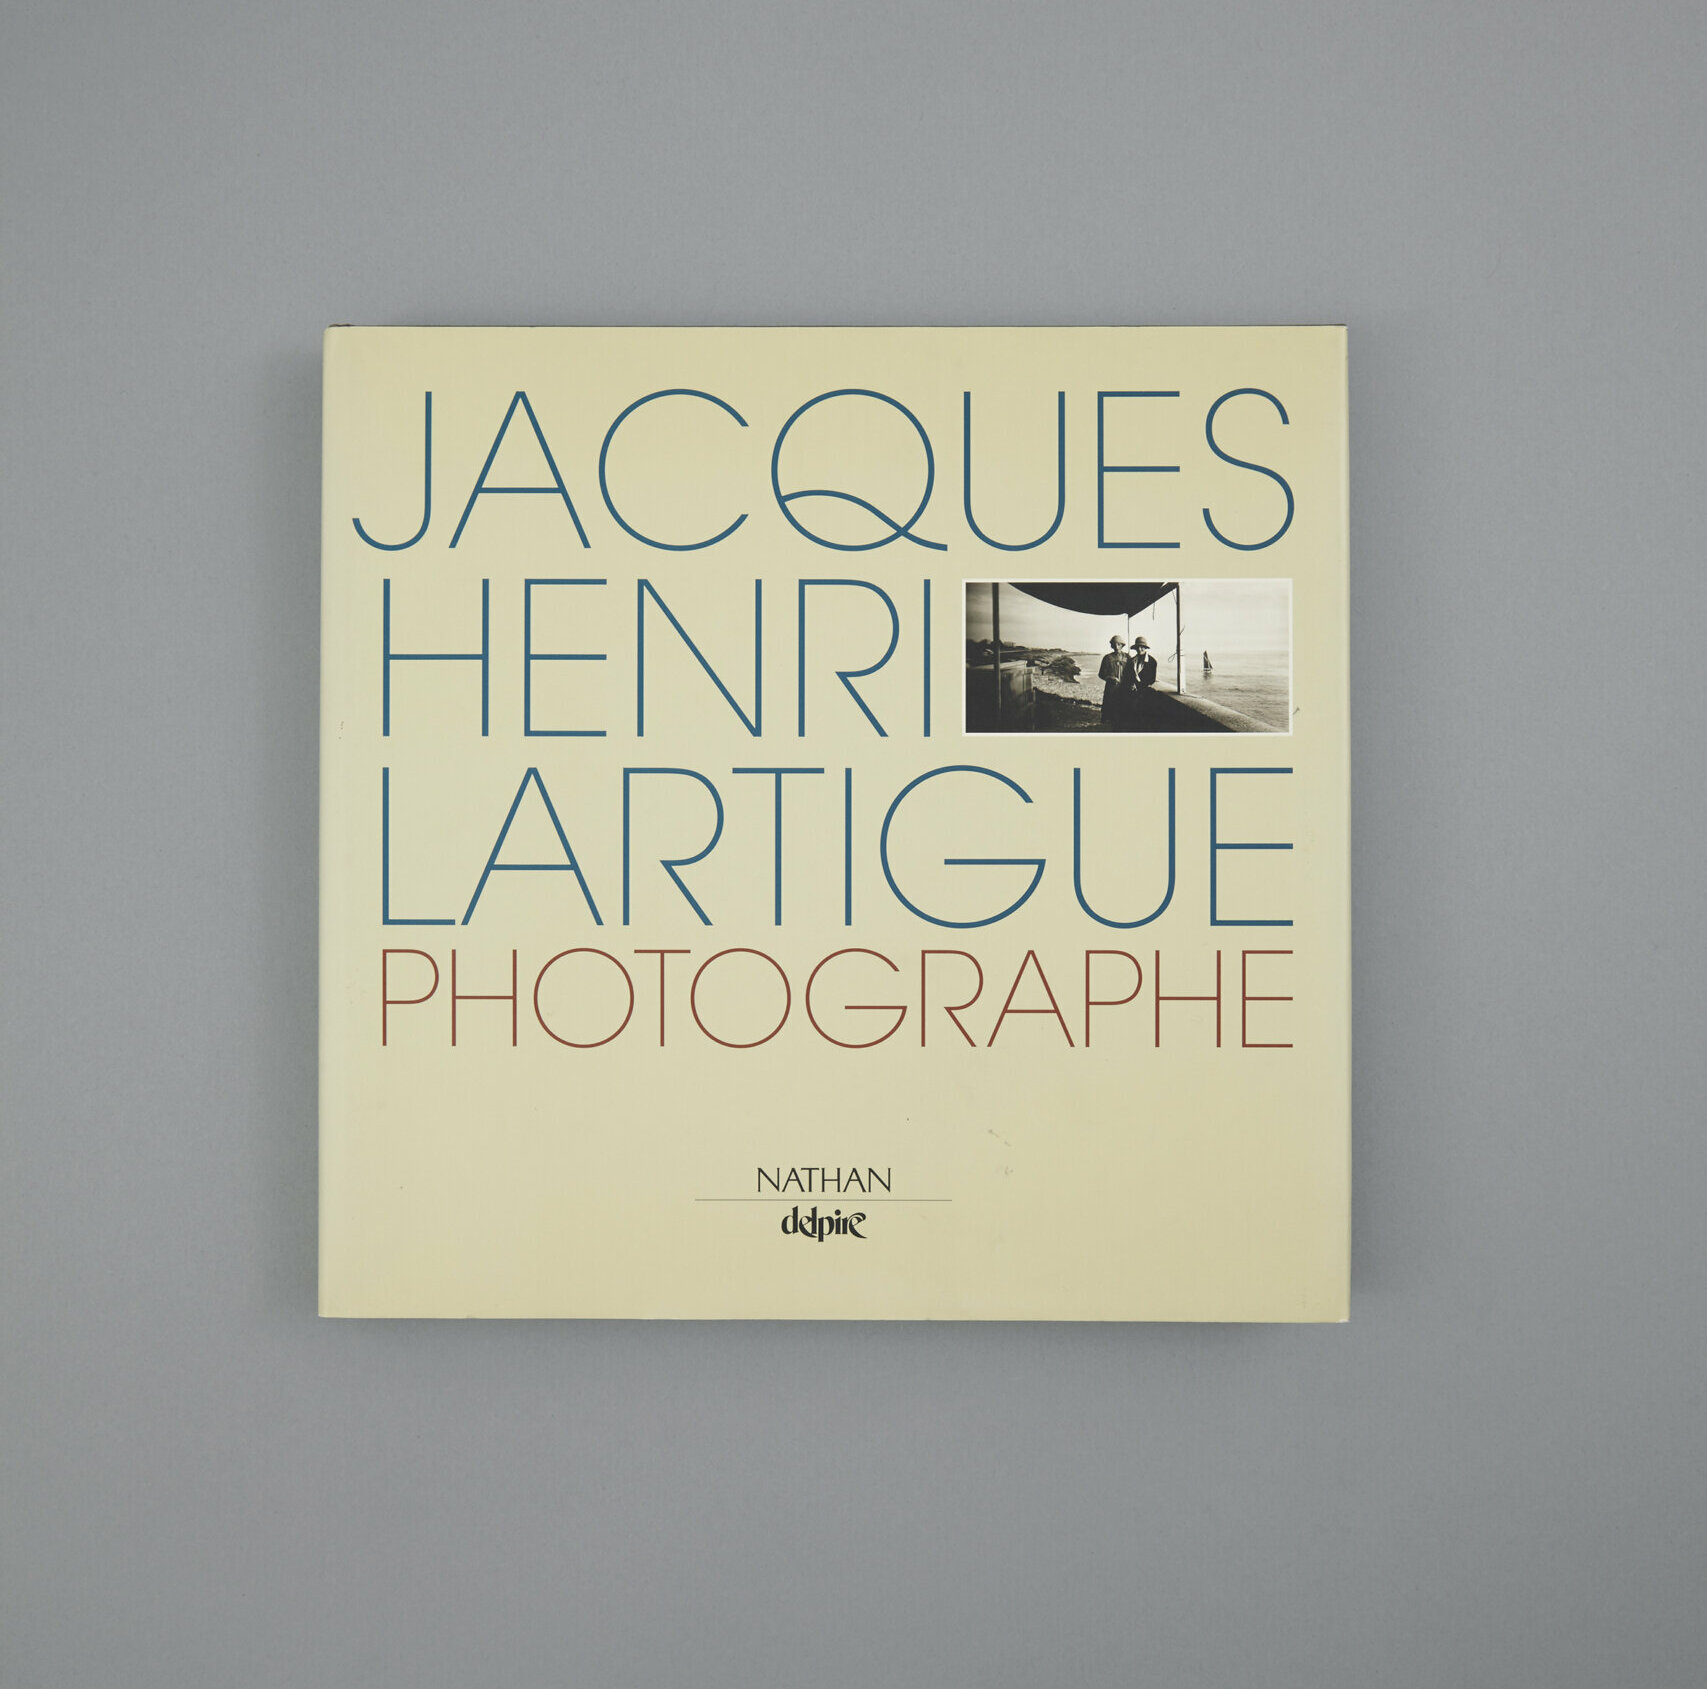 delpire-LARTIGUE-jacques-henri-photographe